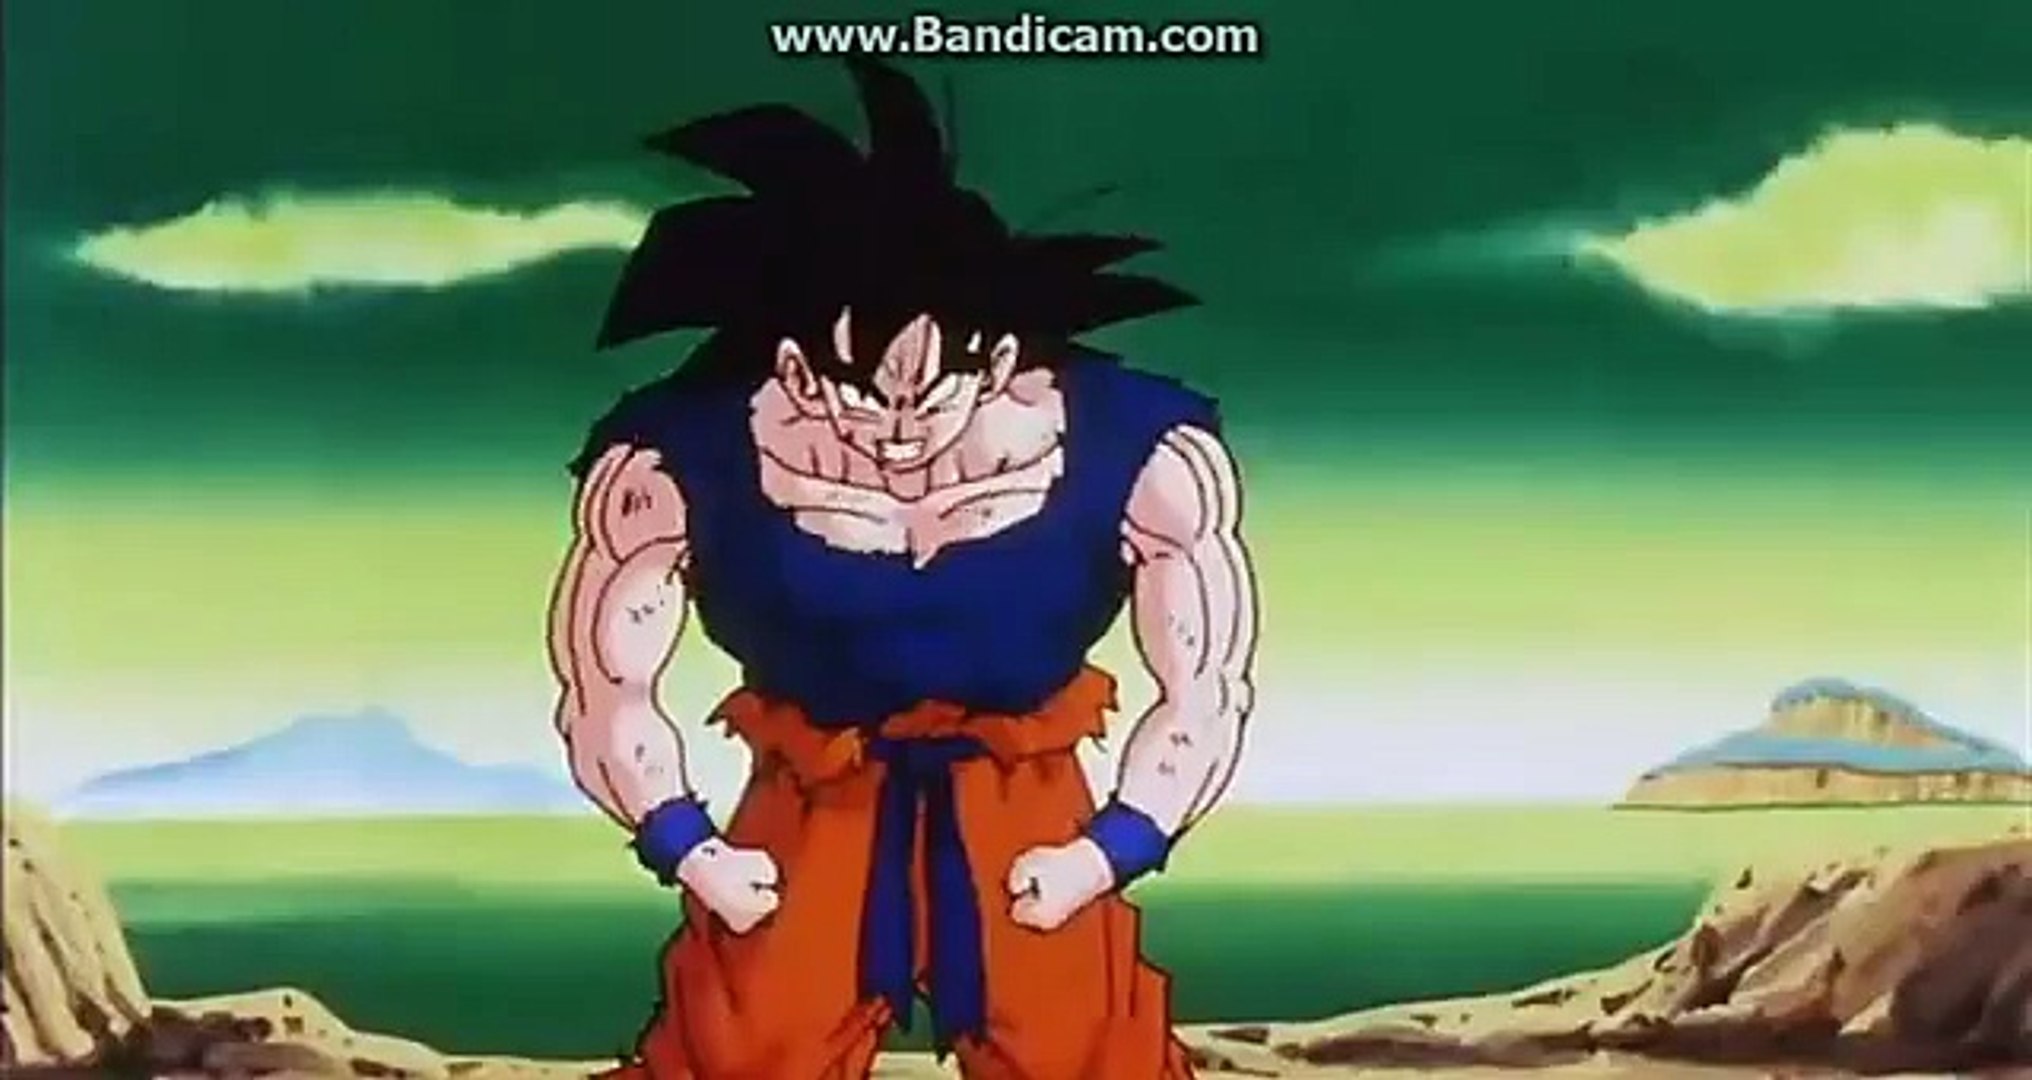 Goku Goes Super Saiyan 1 The First Time (Episode 95 Transformed at